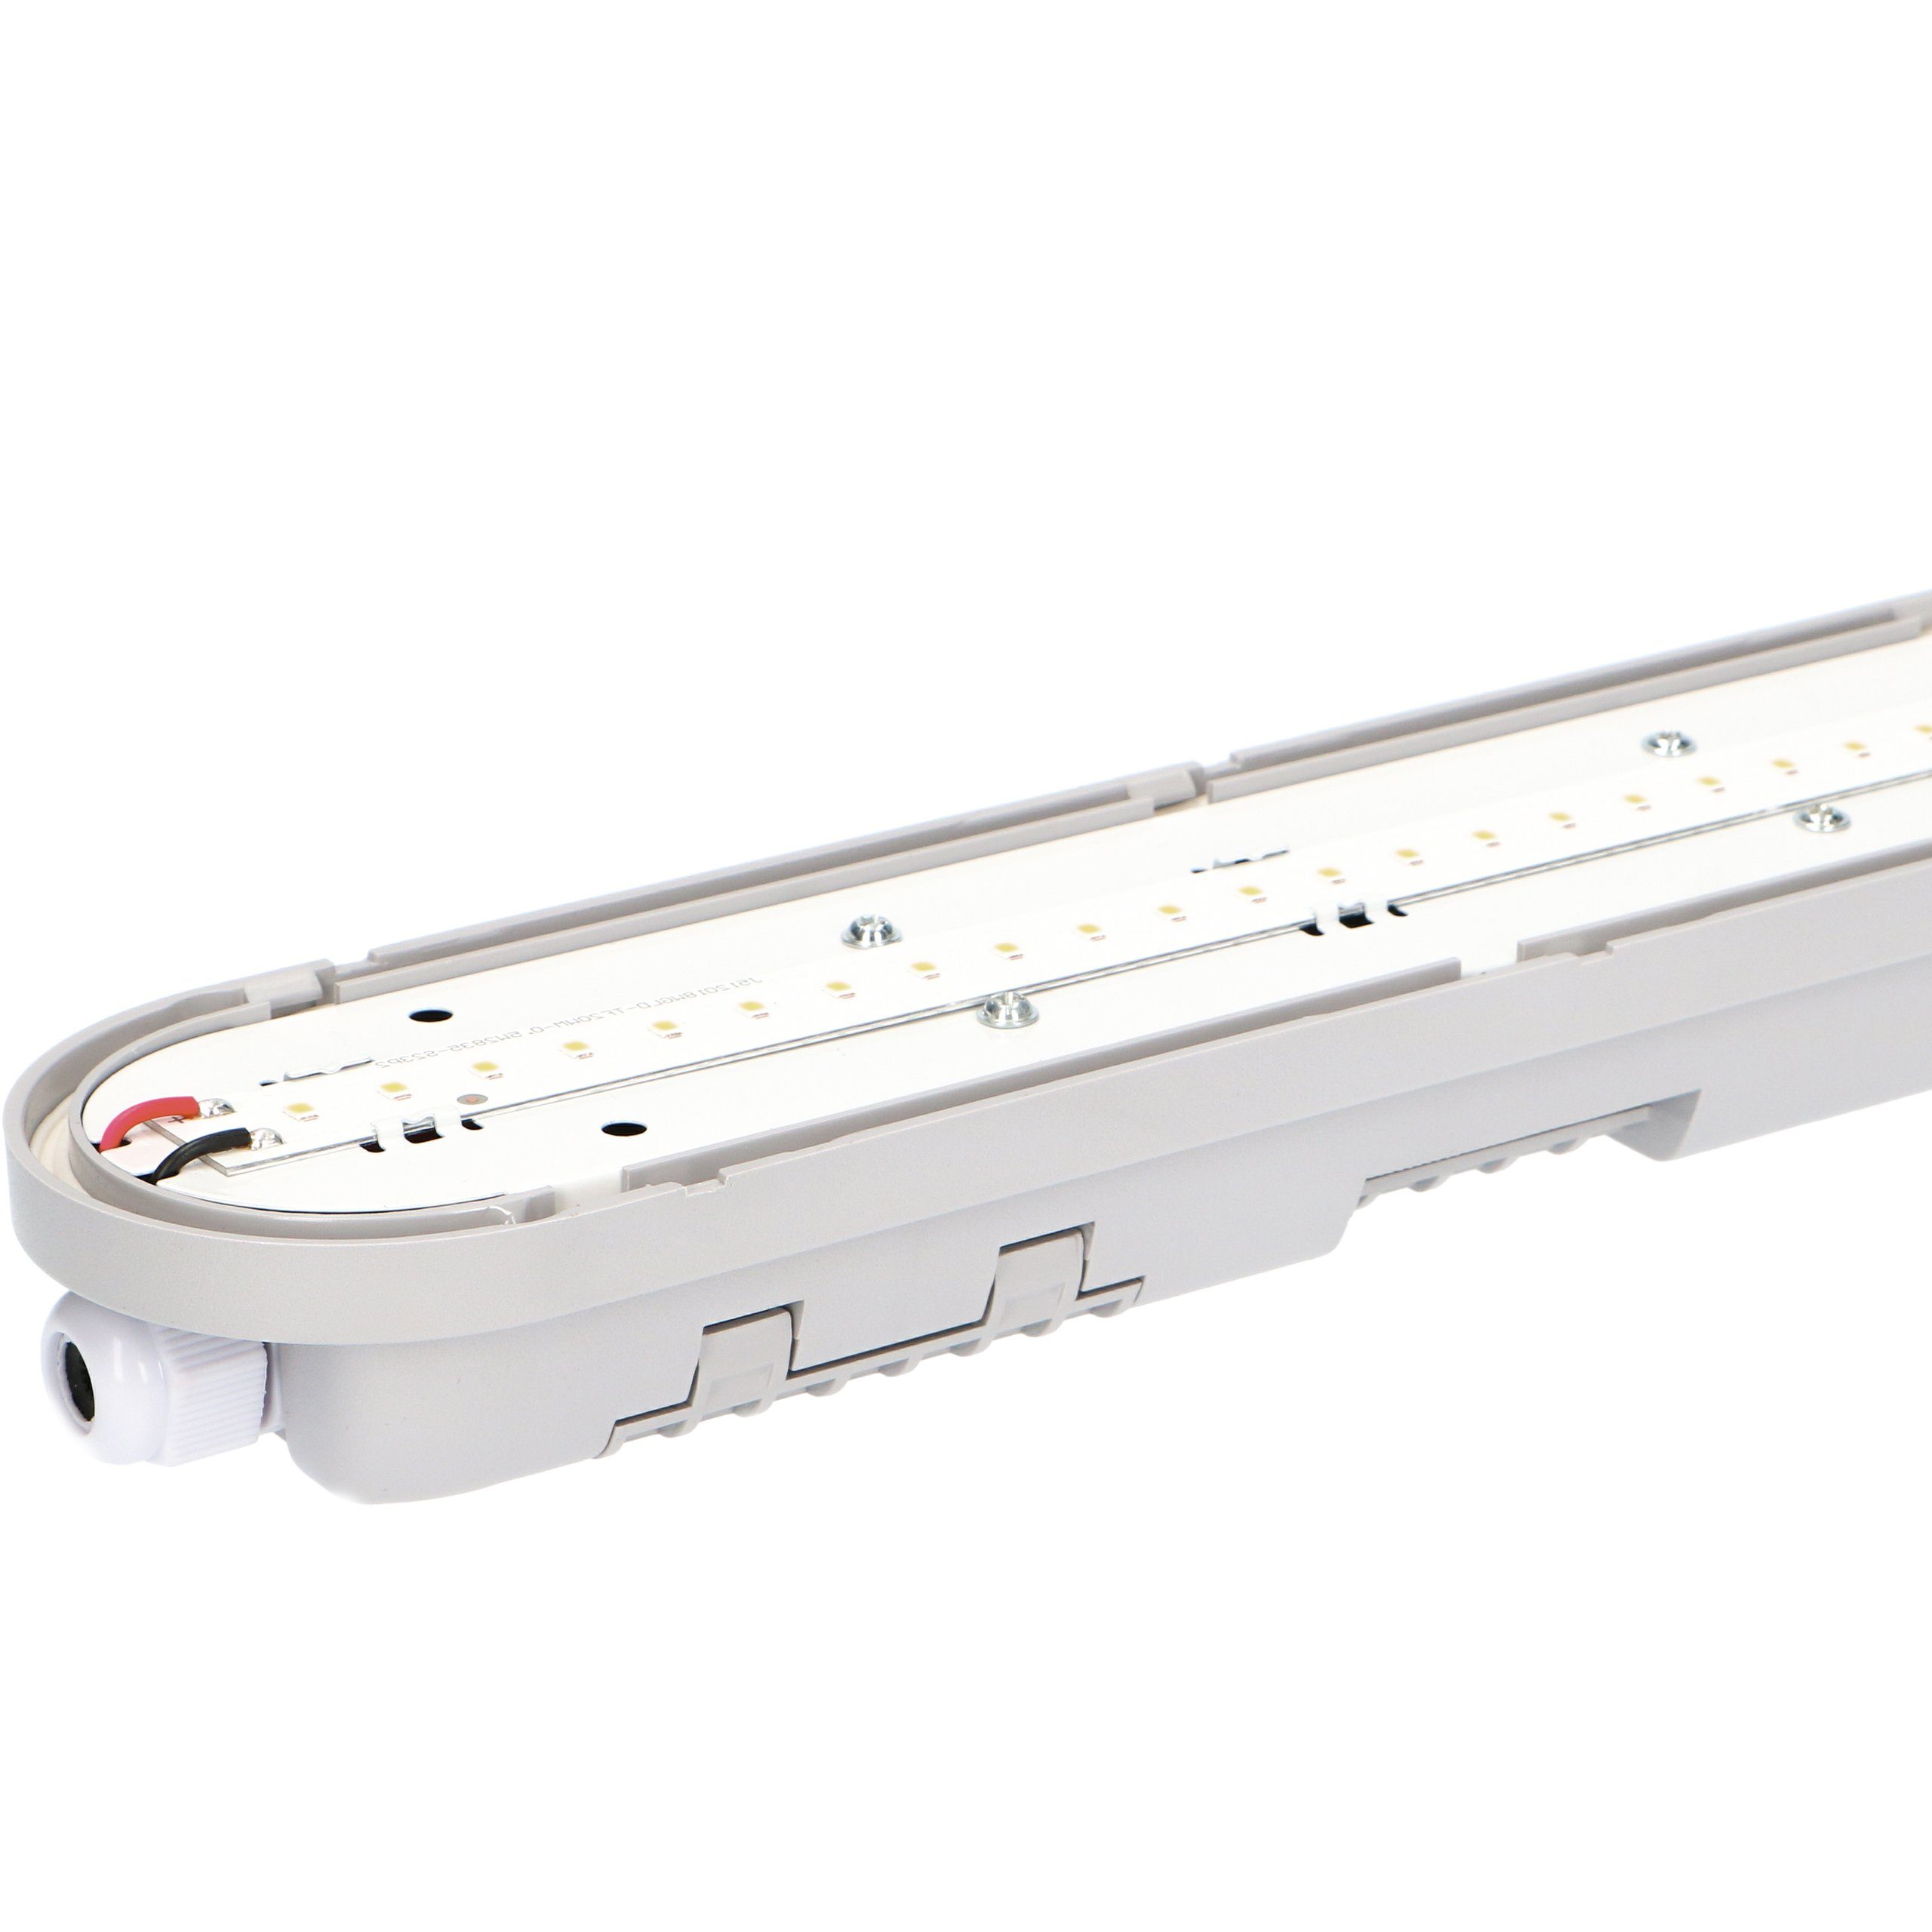 LED's light PRO LED, 36W neutralweiß Deckenleuchte 2400229_01 120 LED cm LED-Feuchtraumleuchte, IP65